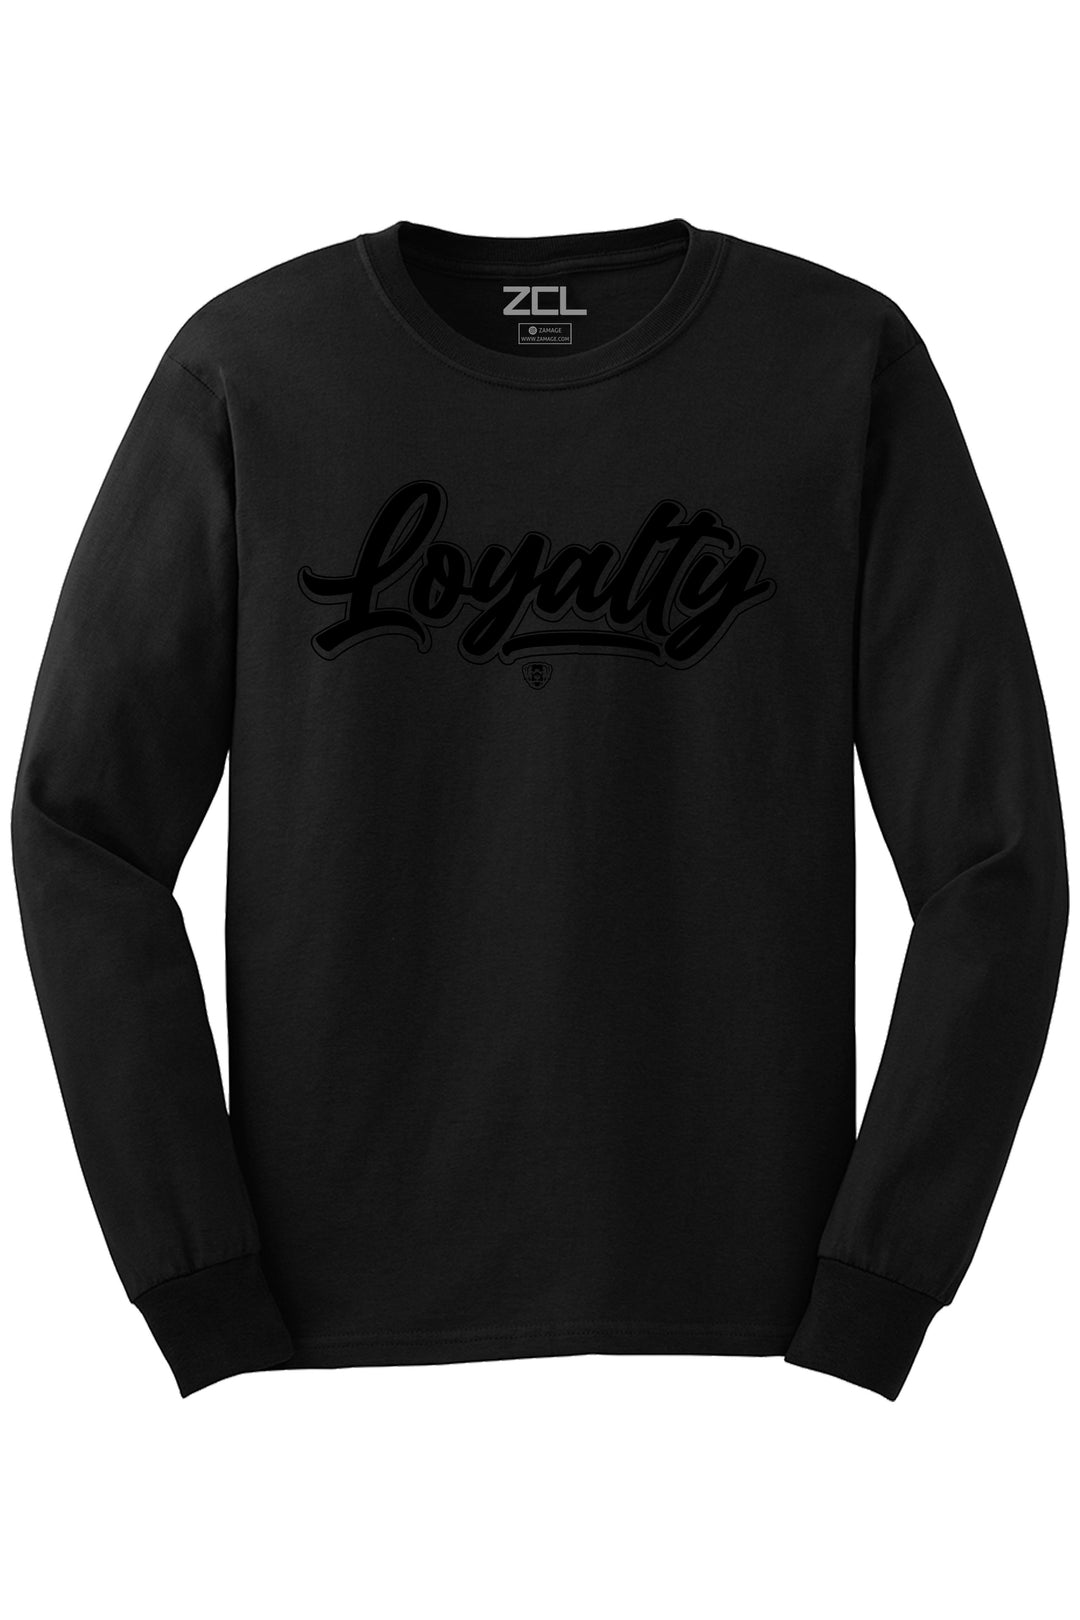 Loyalty Long Sleeve Tee (Black Logo) - Zamage